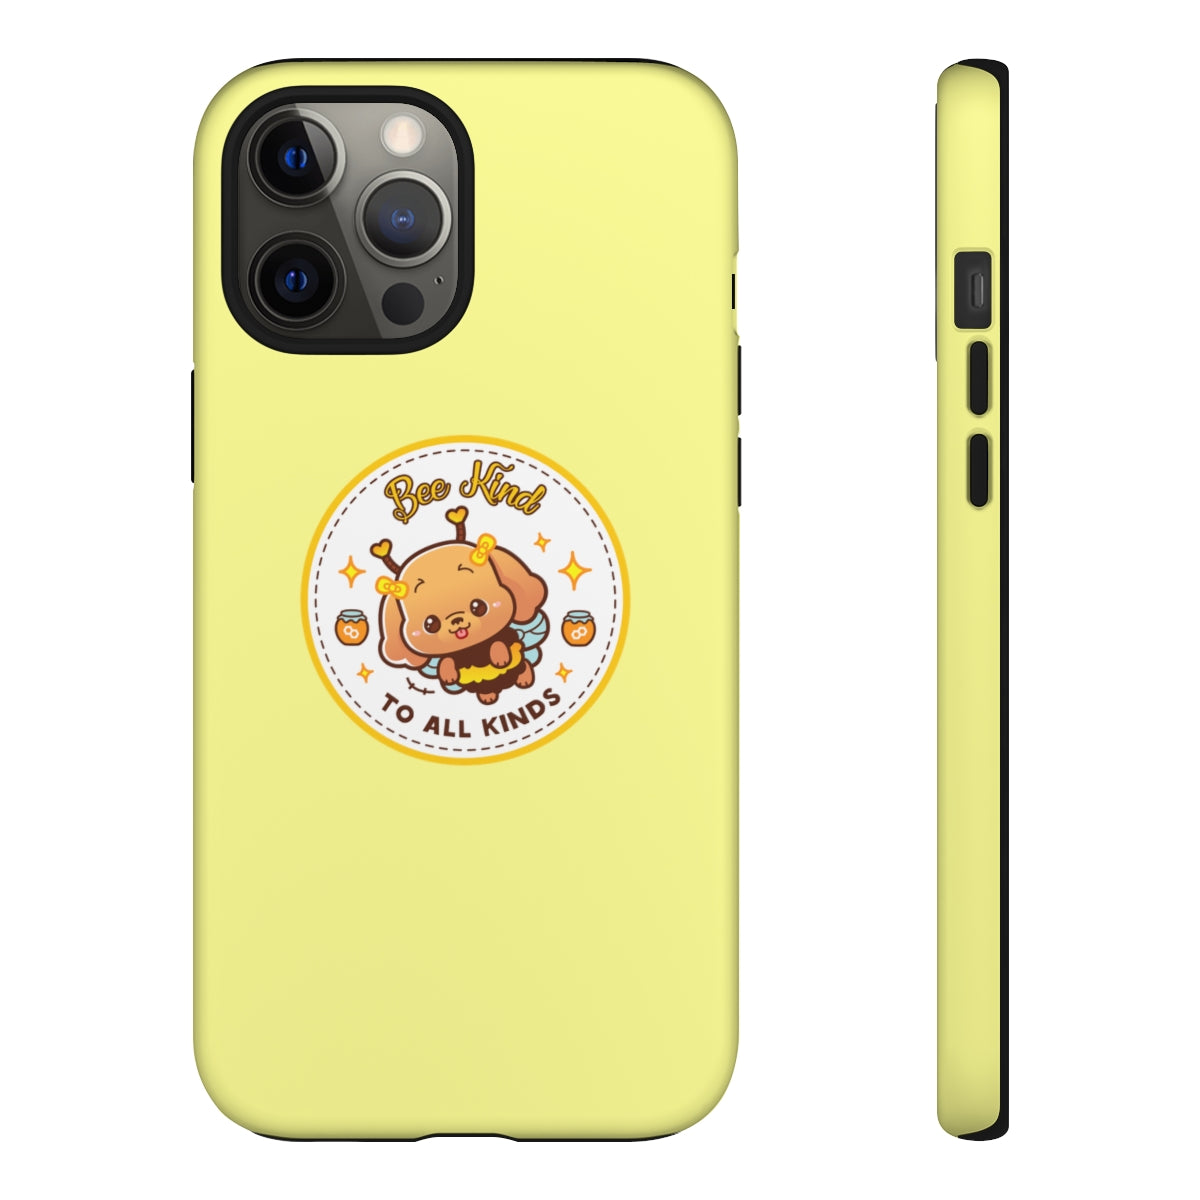 Cute Kawaii iPhone Case, Luxury iPhone Case, iPhone 12 13 Case, Pastel Yellow iPhone Case, Fashion iPhone Case